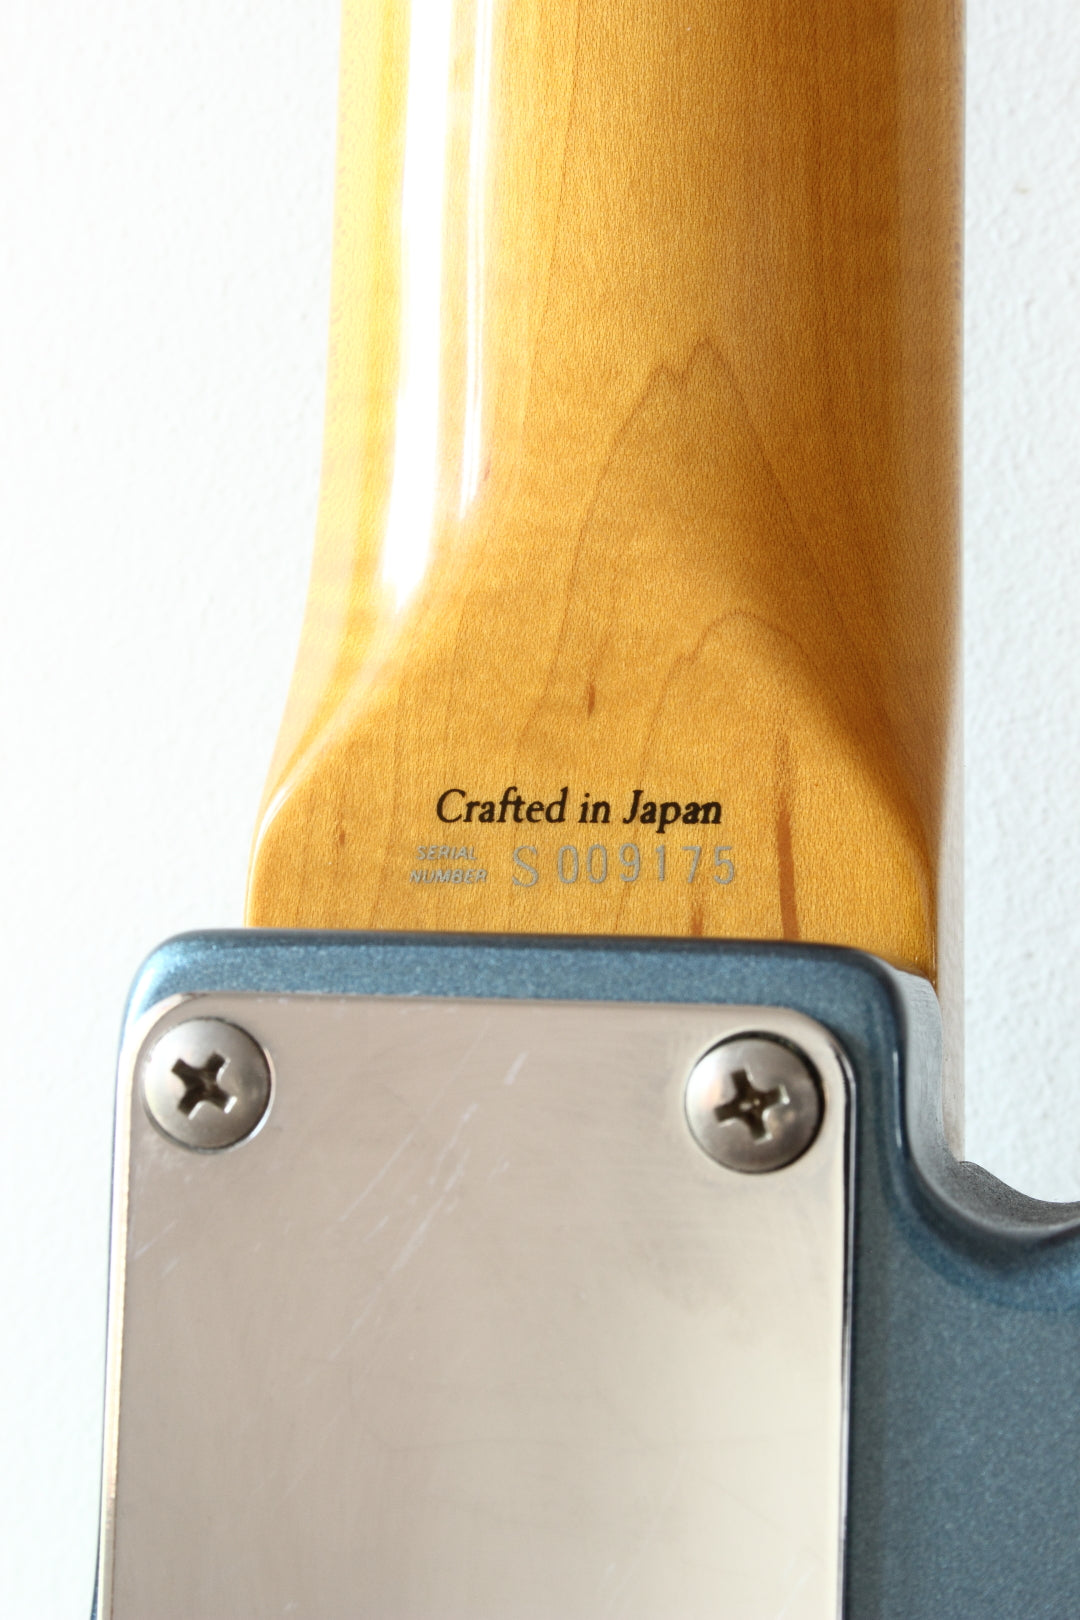 Fender Japan '62 Reissue Telecaster TL62-65US Lake Placid Blue 2004-05